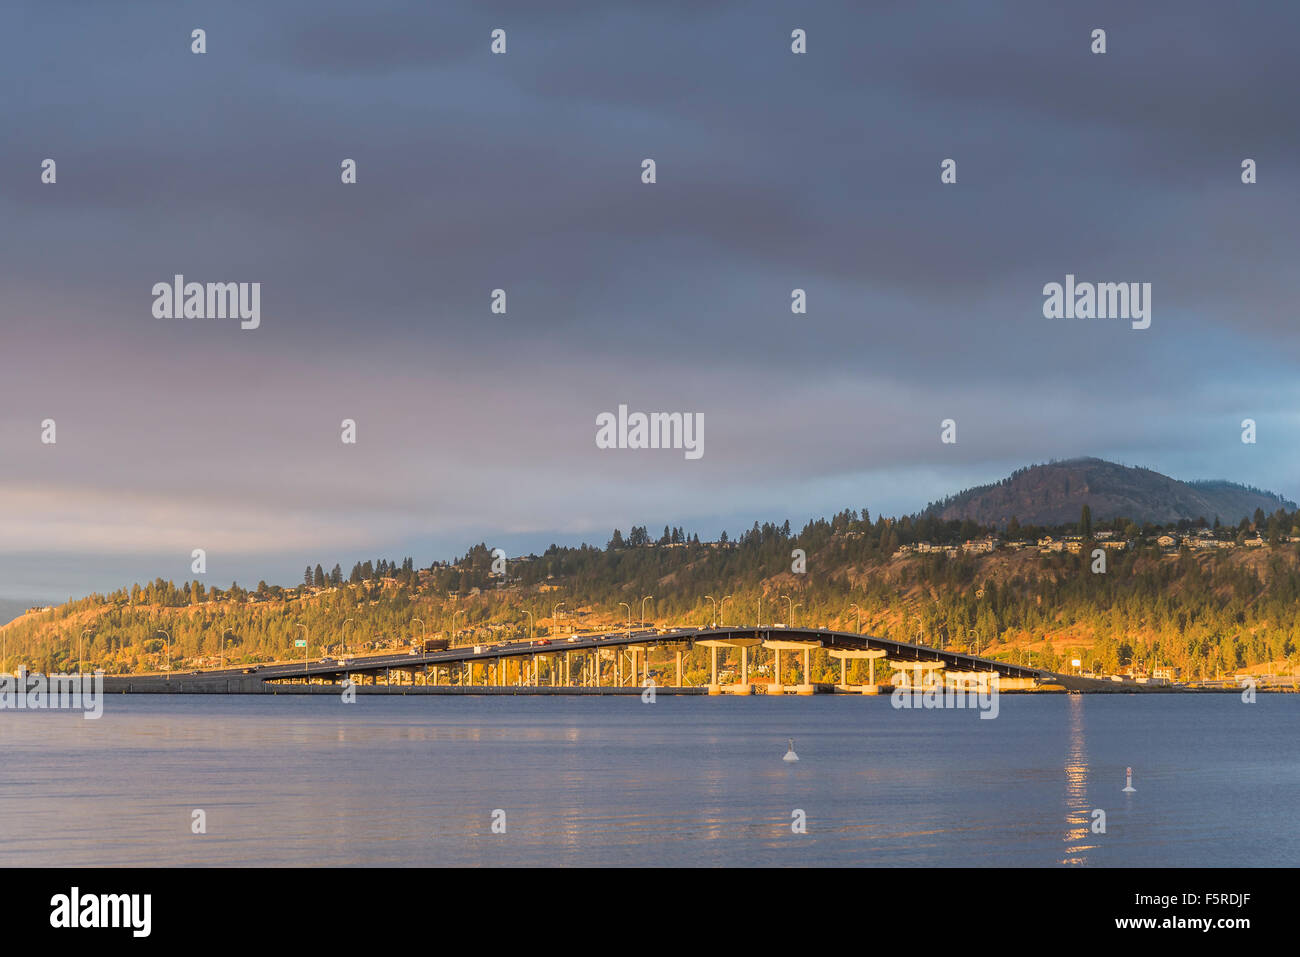 William R Bennett Bridge Kelowna British Columbia Canada Stock Photo Alamy